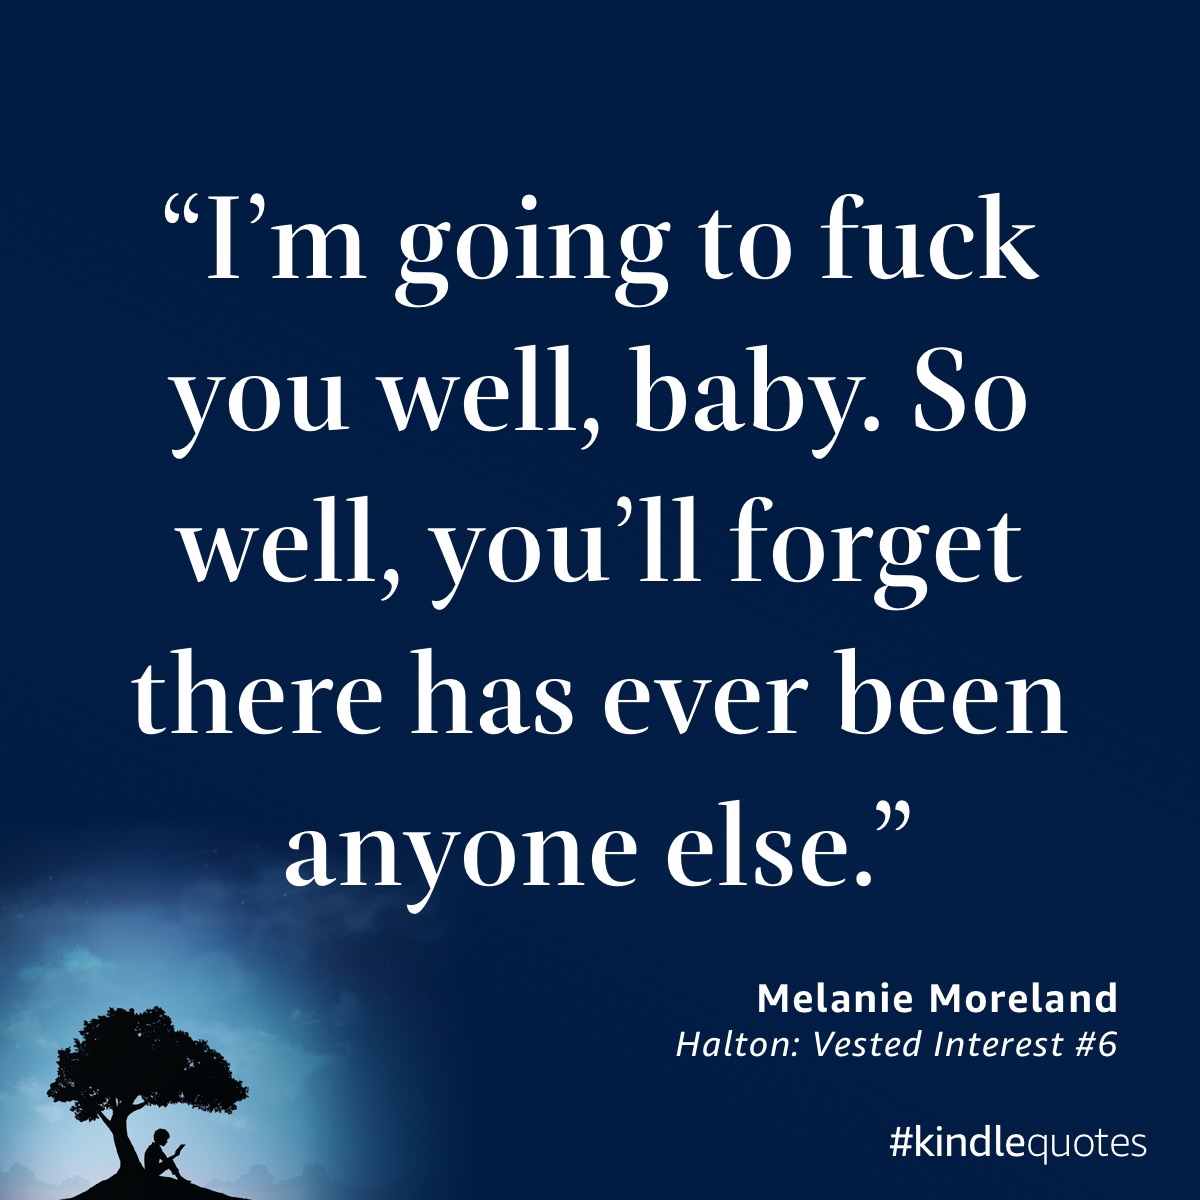 Book quote Melanie Moreland